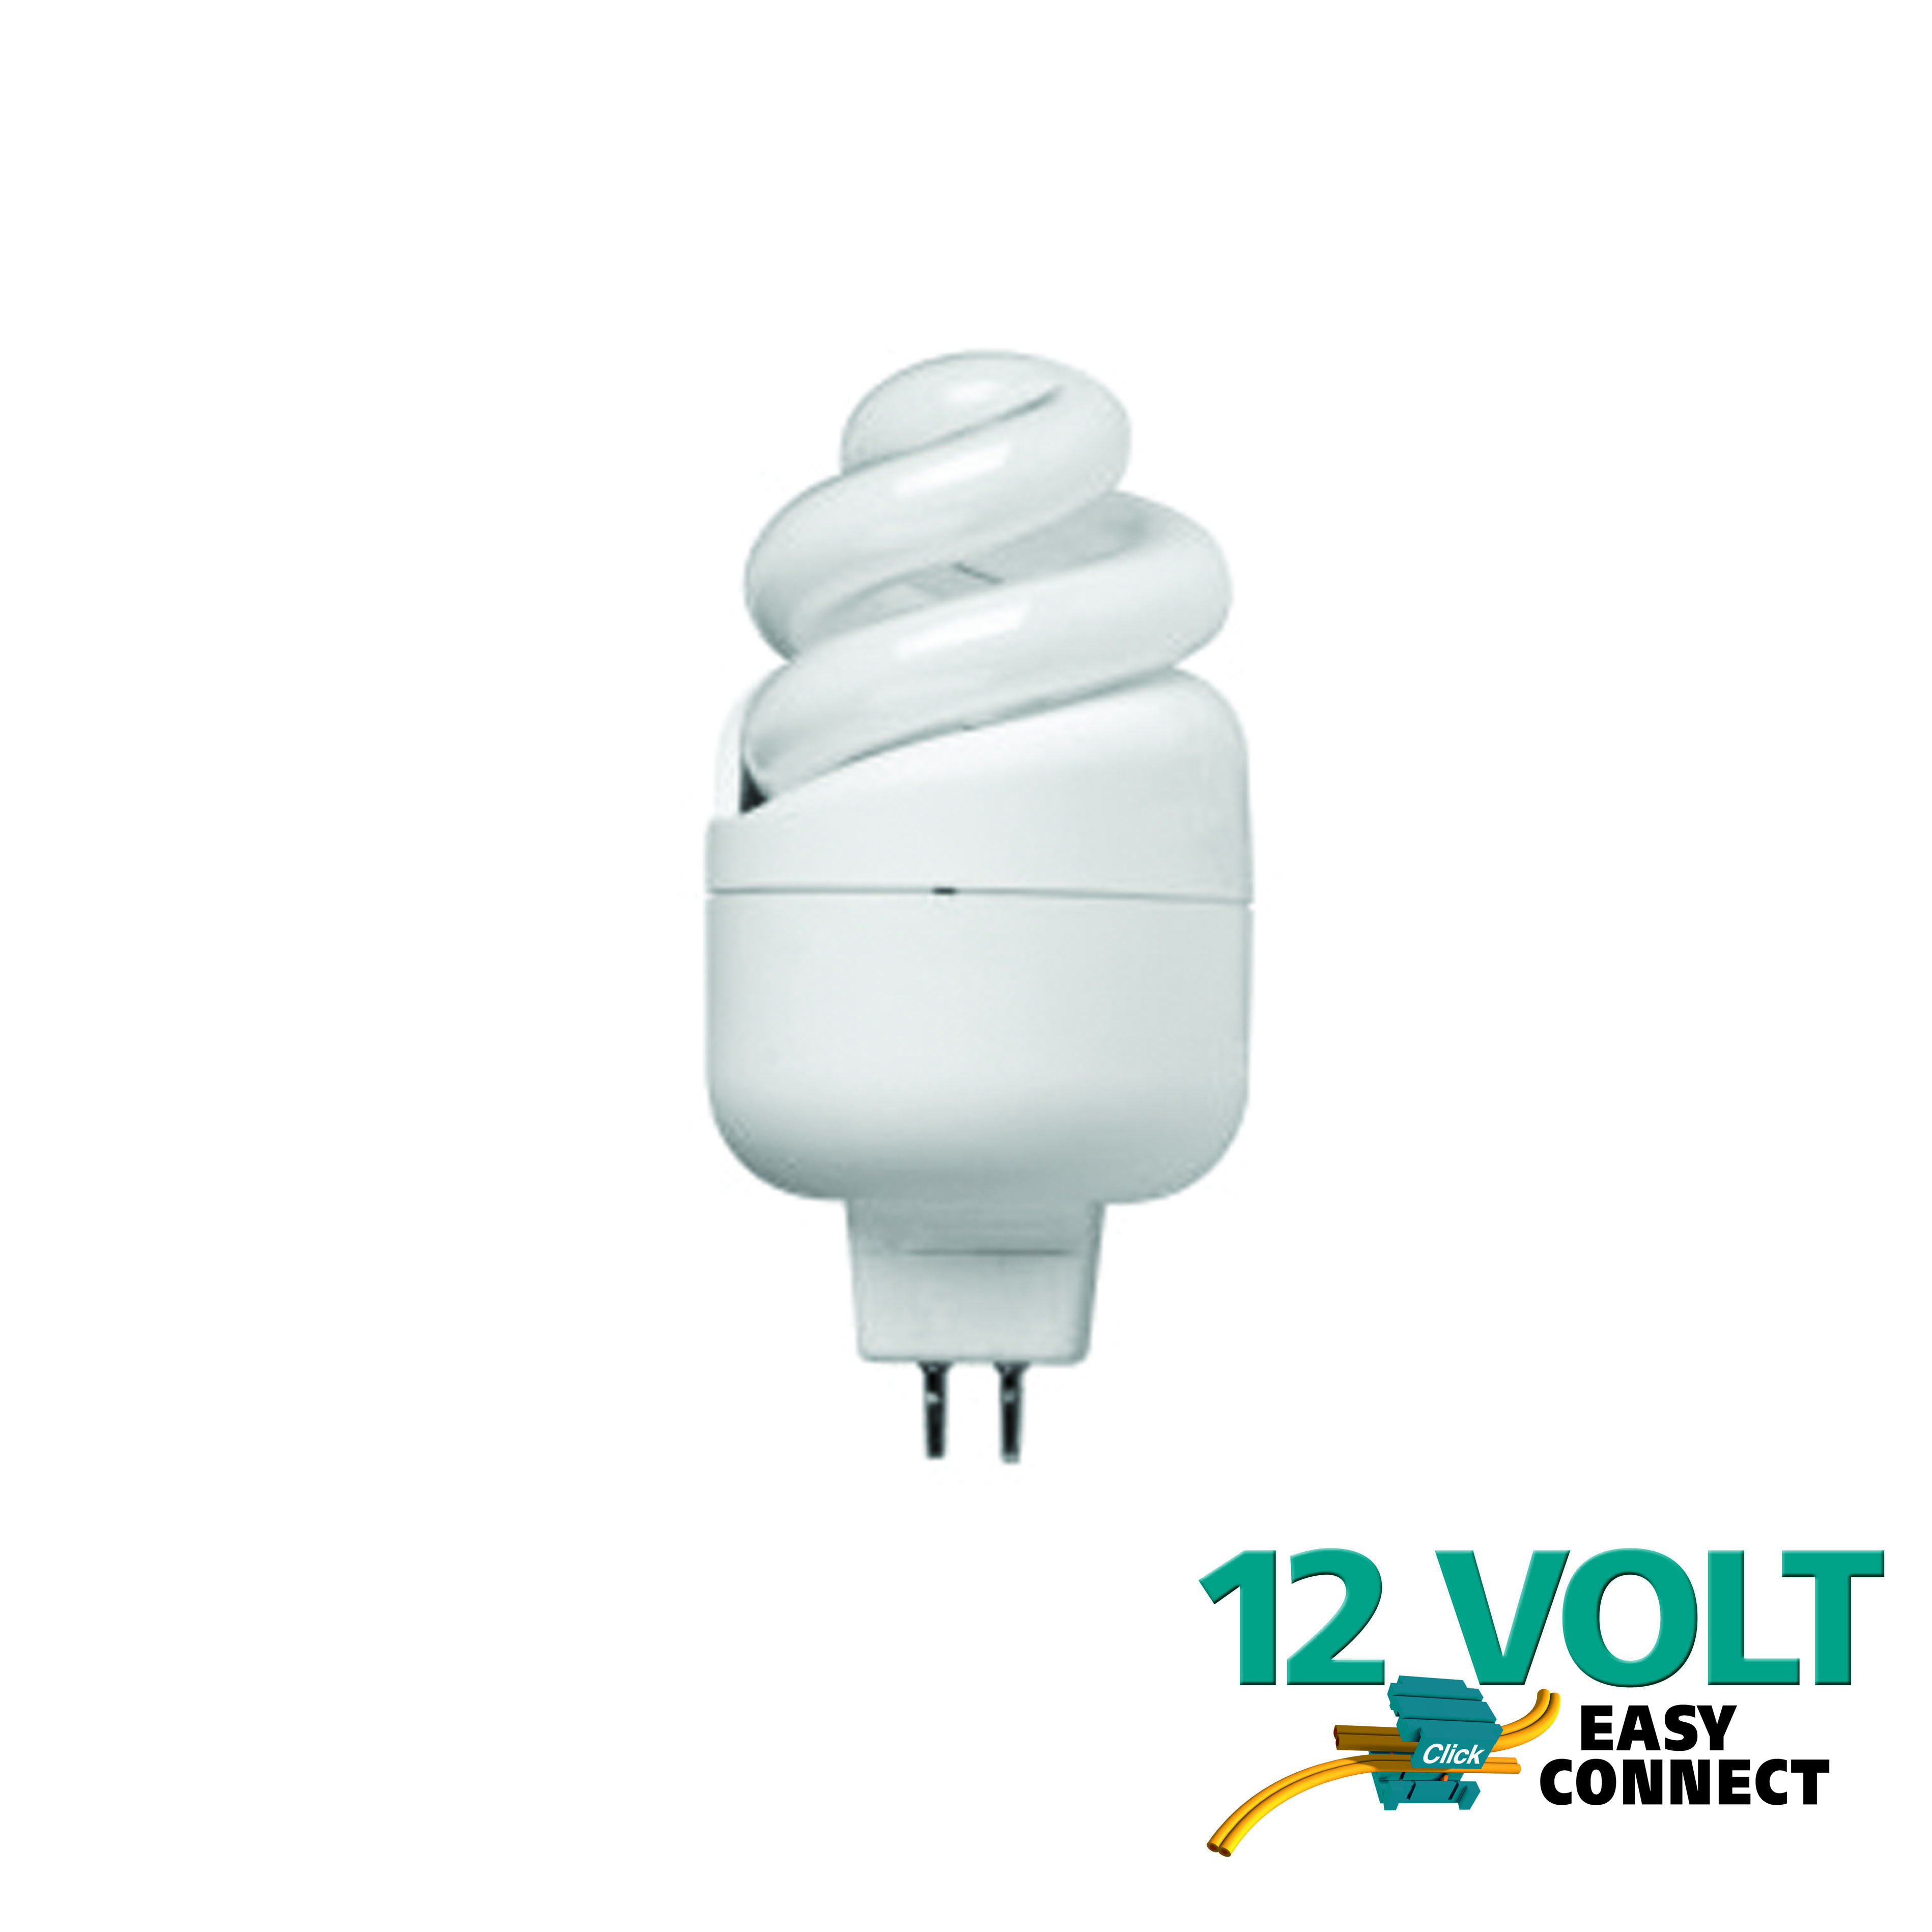 Energy saving 12V AC 2-pin 11W